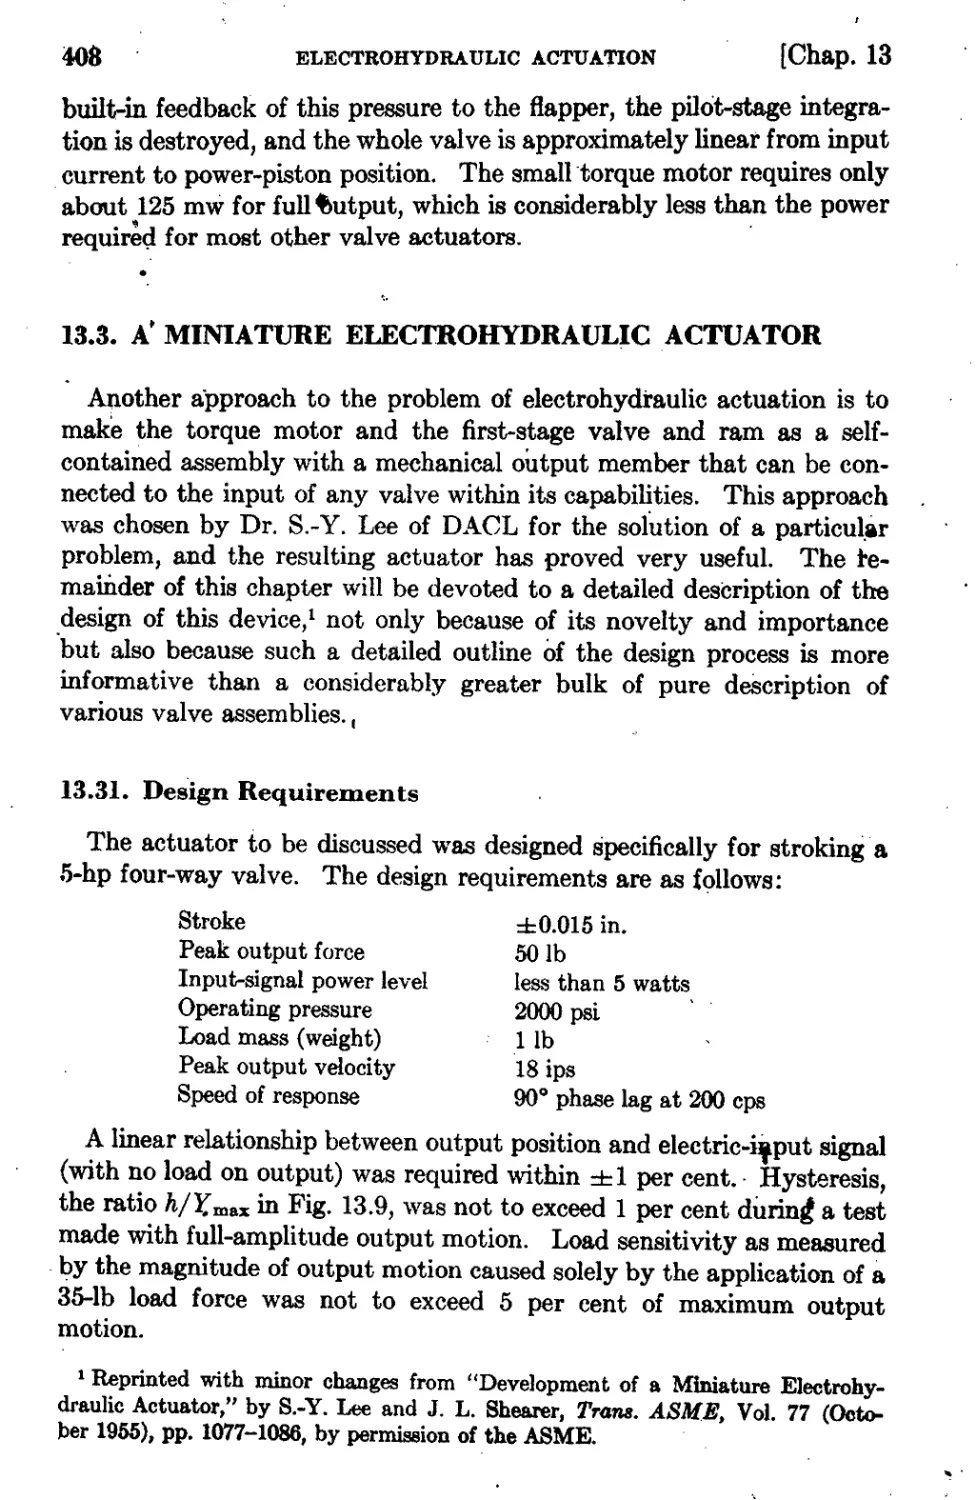 13.3 A Miniature Electrohydraulic Actuator